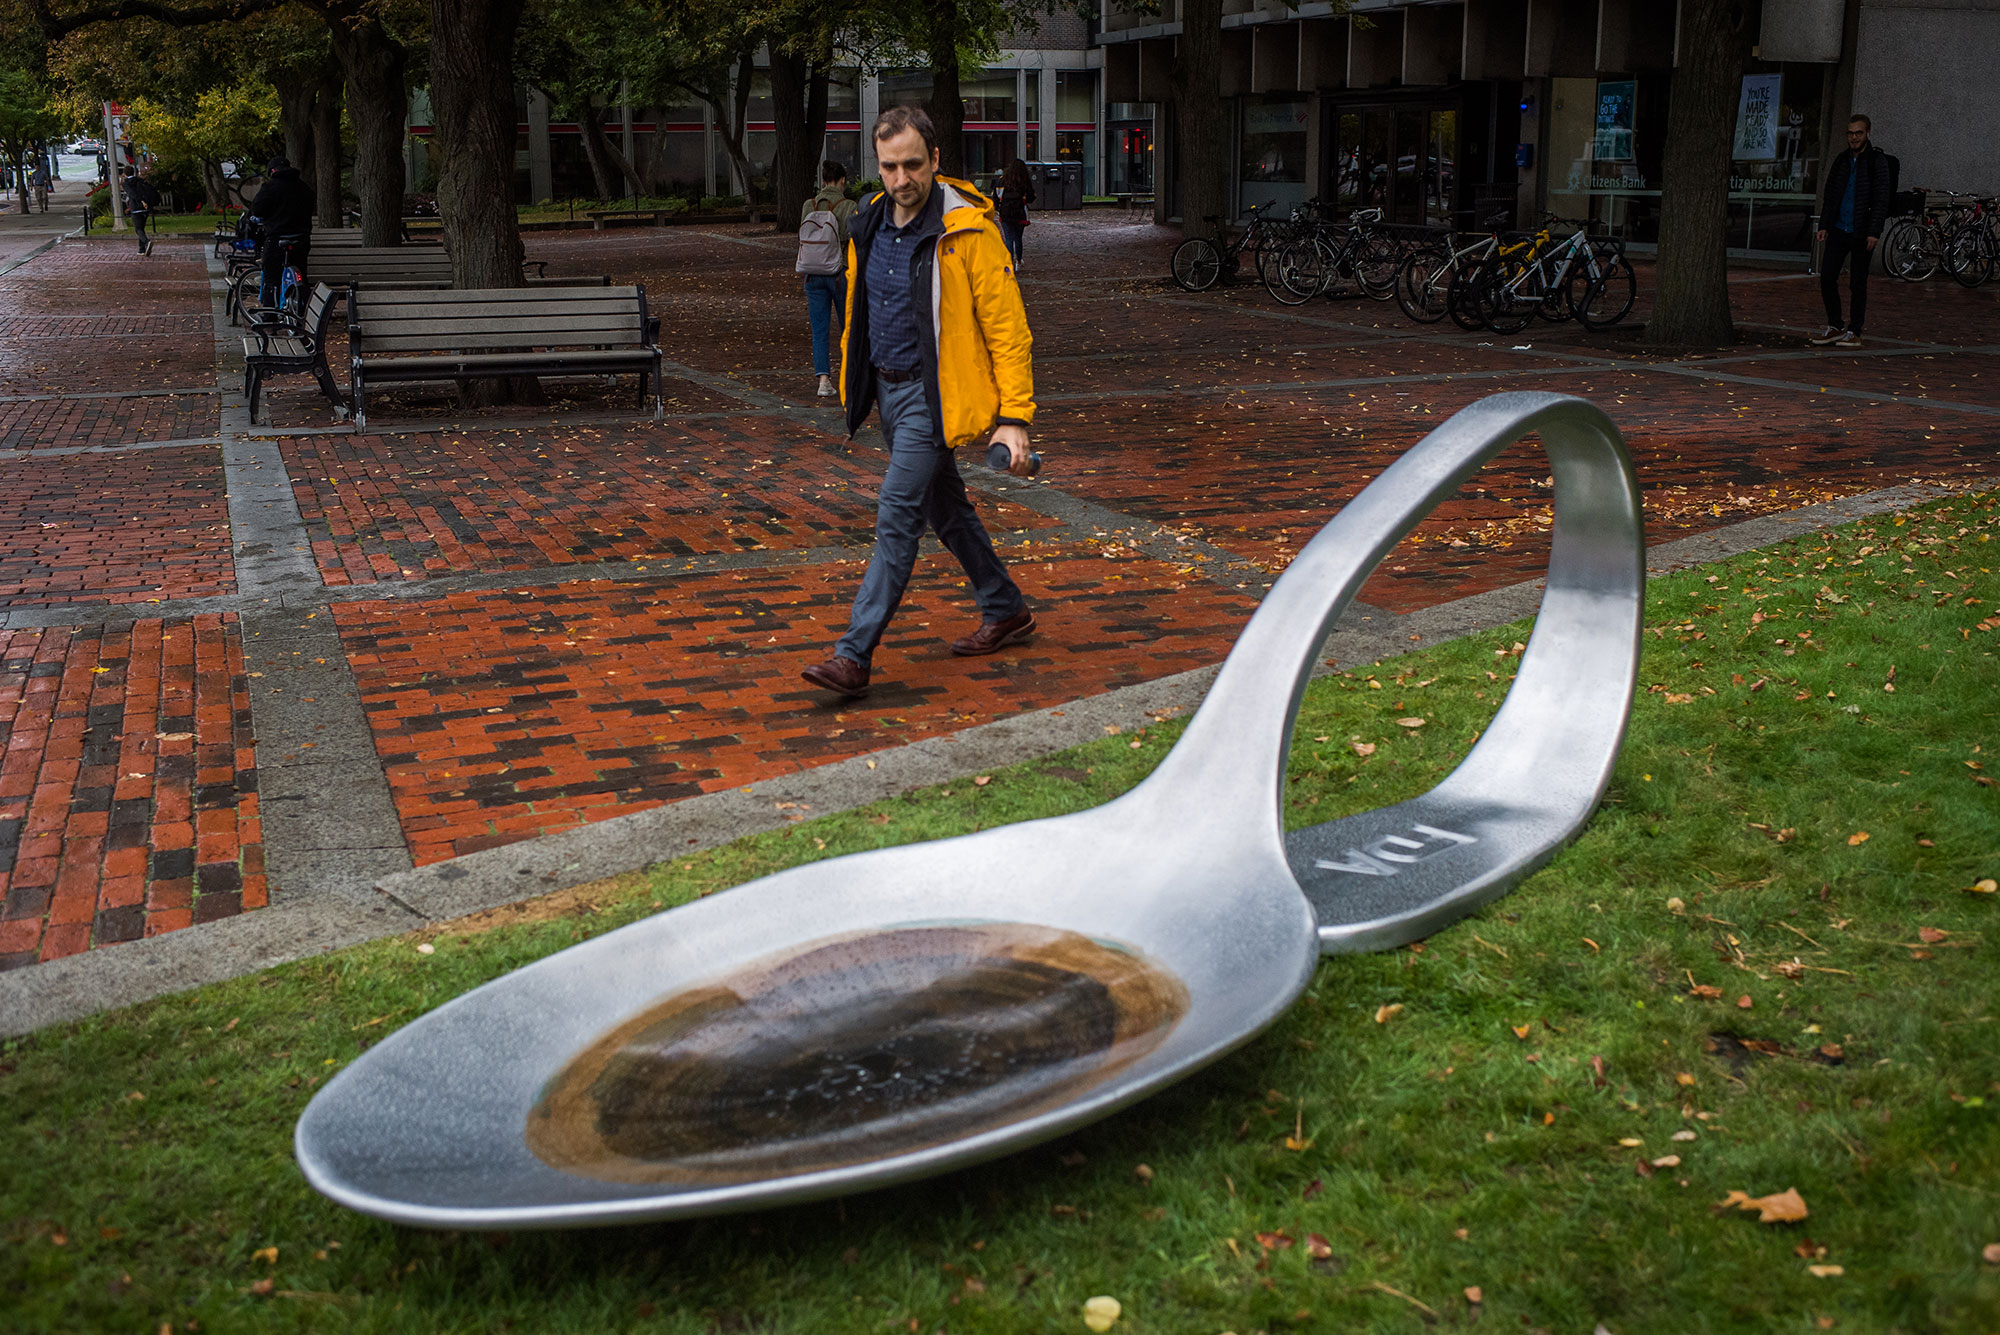 Domenico Esposito's FDA Spoon sculpture on display on the Boston University Charles River Campus.